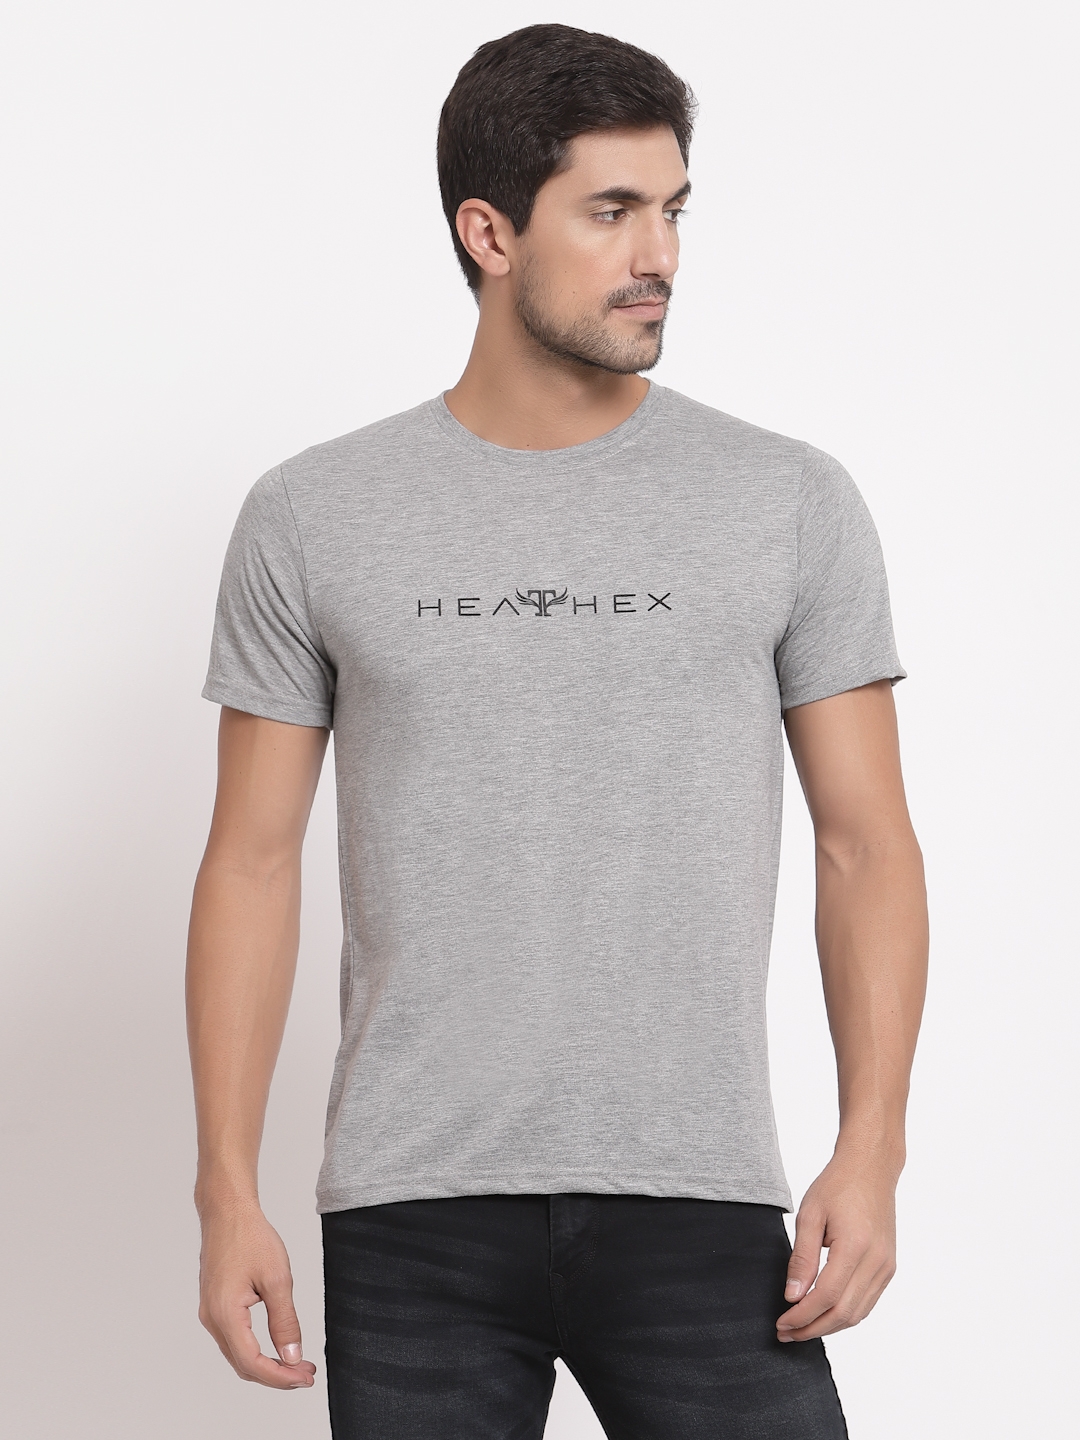 HEATHEX | HEATHEX Cotton Blend Printed Half Sleeve Light Grey T-Shirt for Men 0